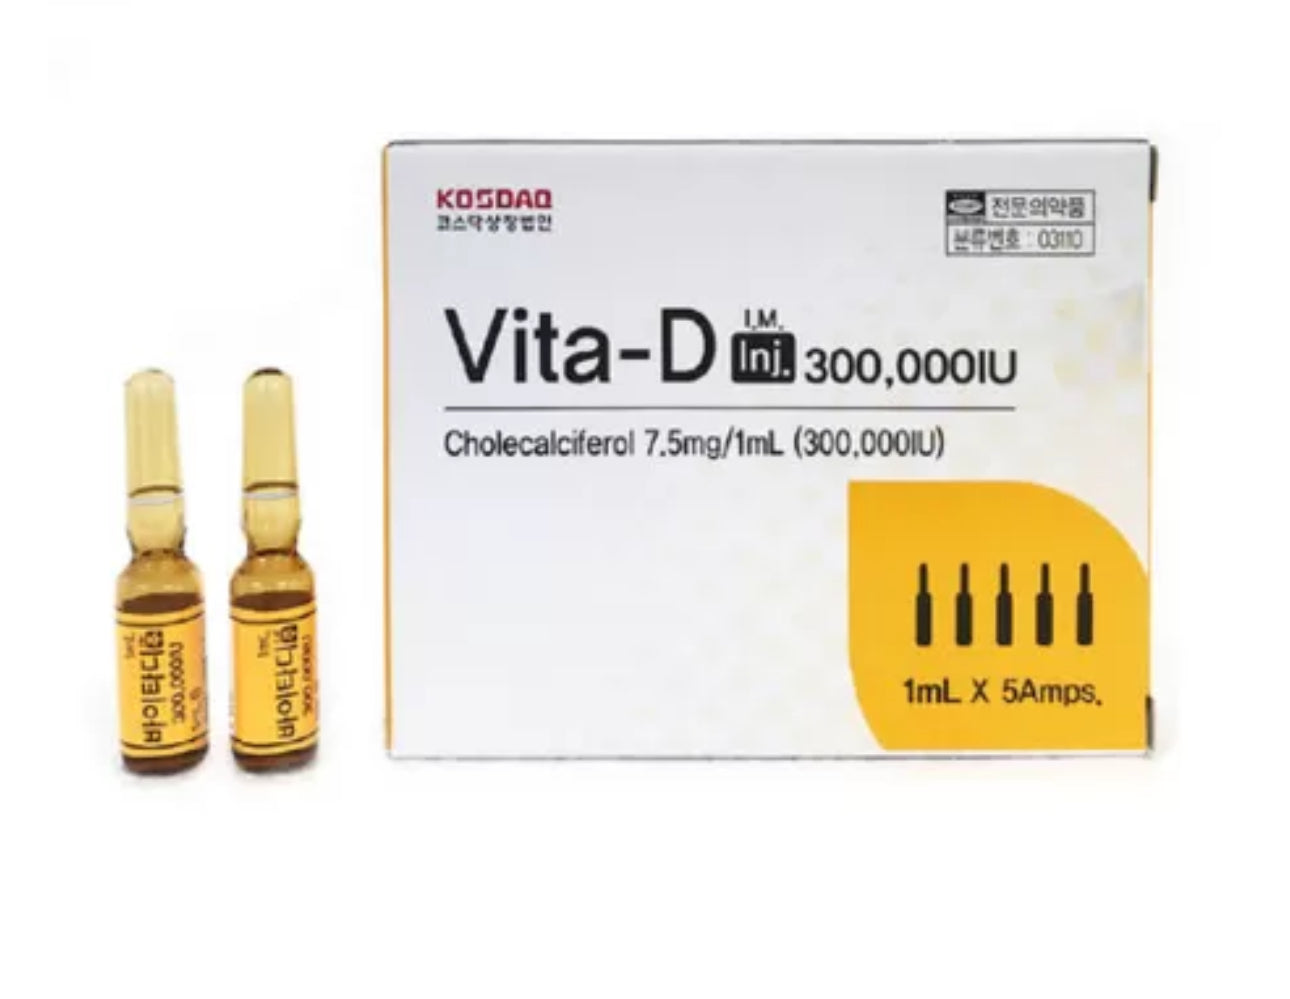 Vitamin D (Vita-D) 300,000IU